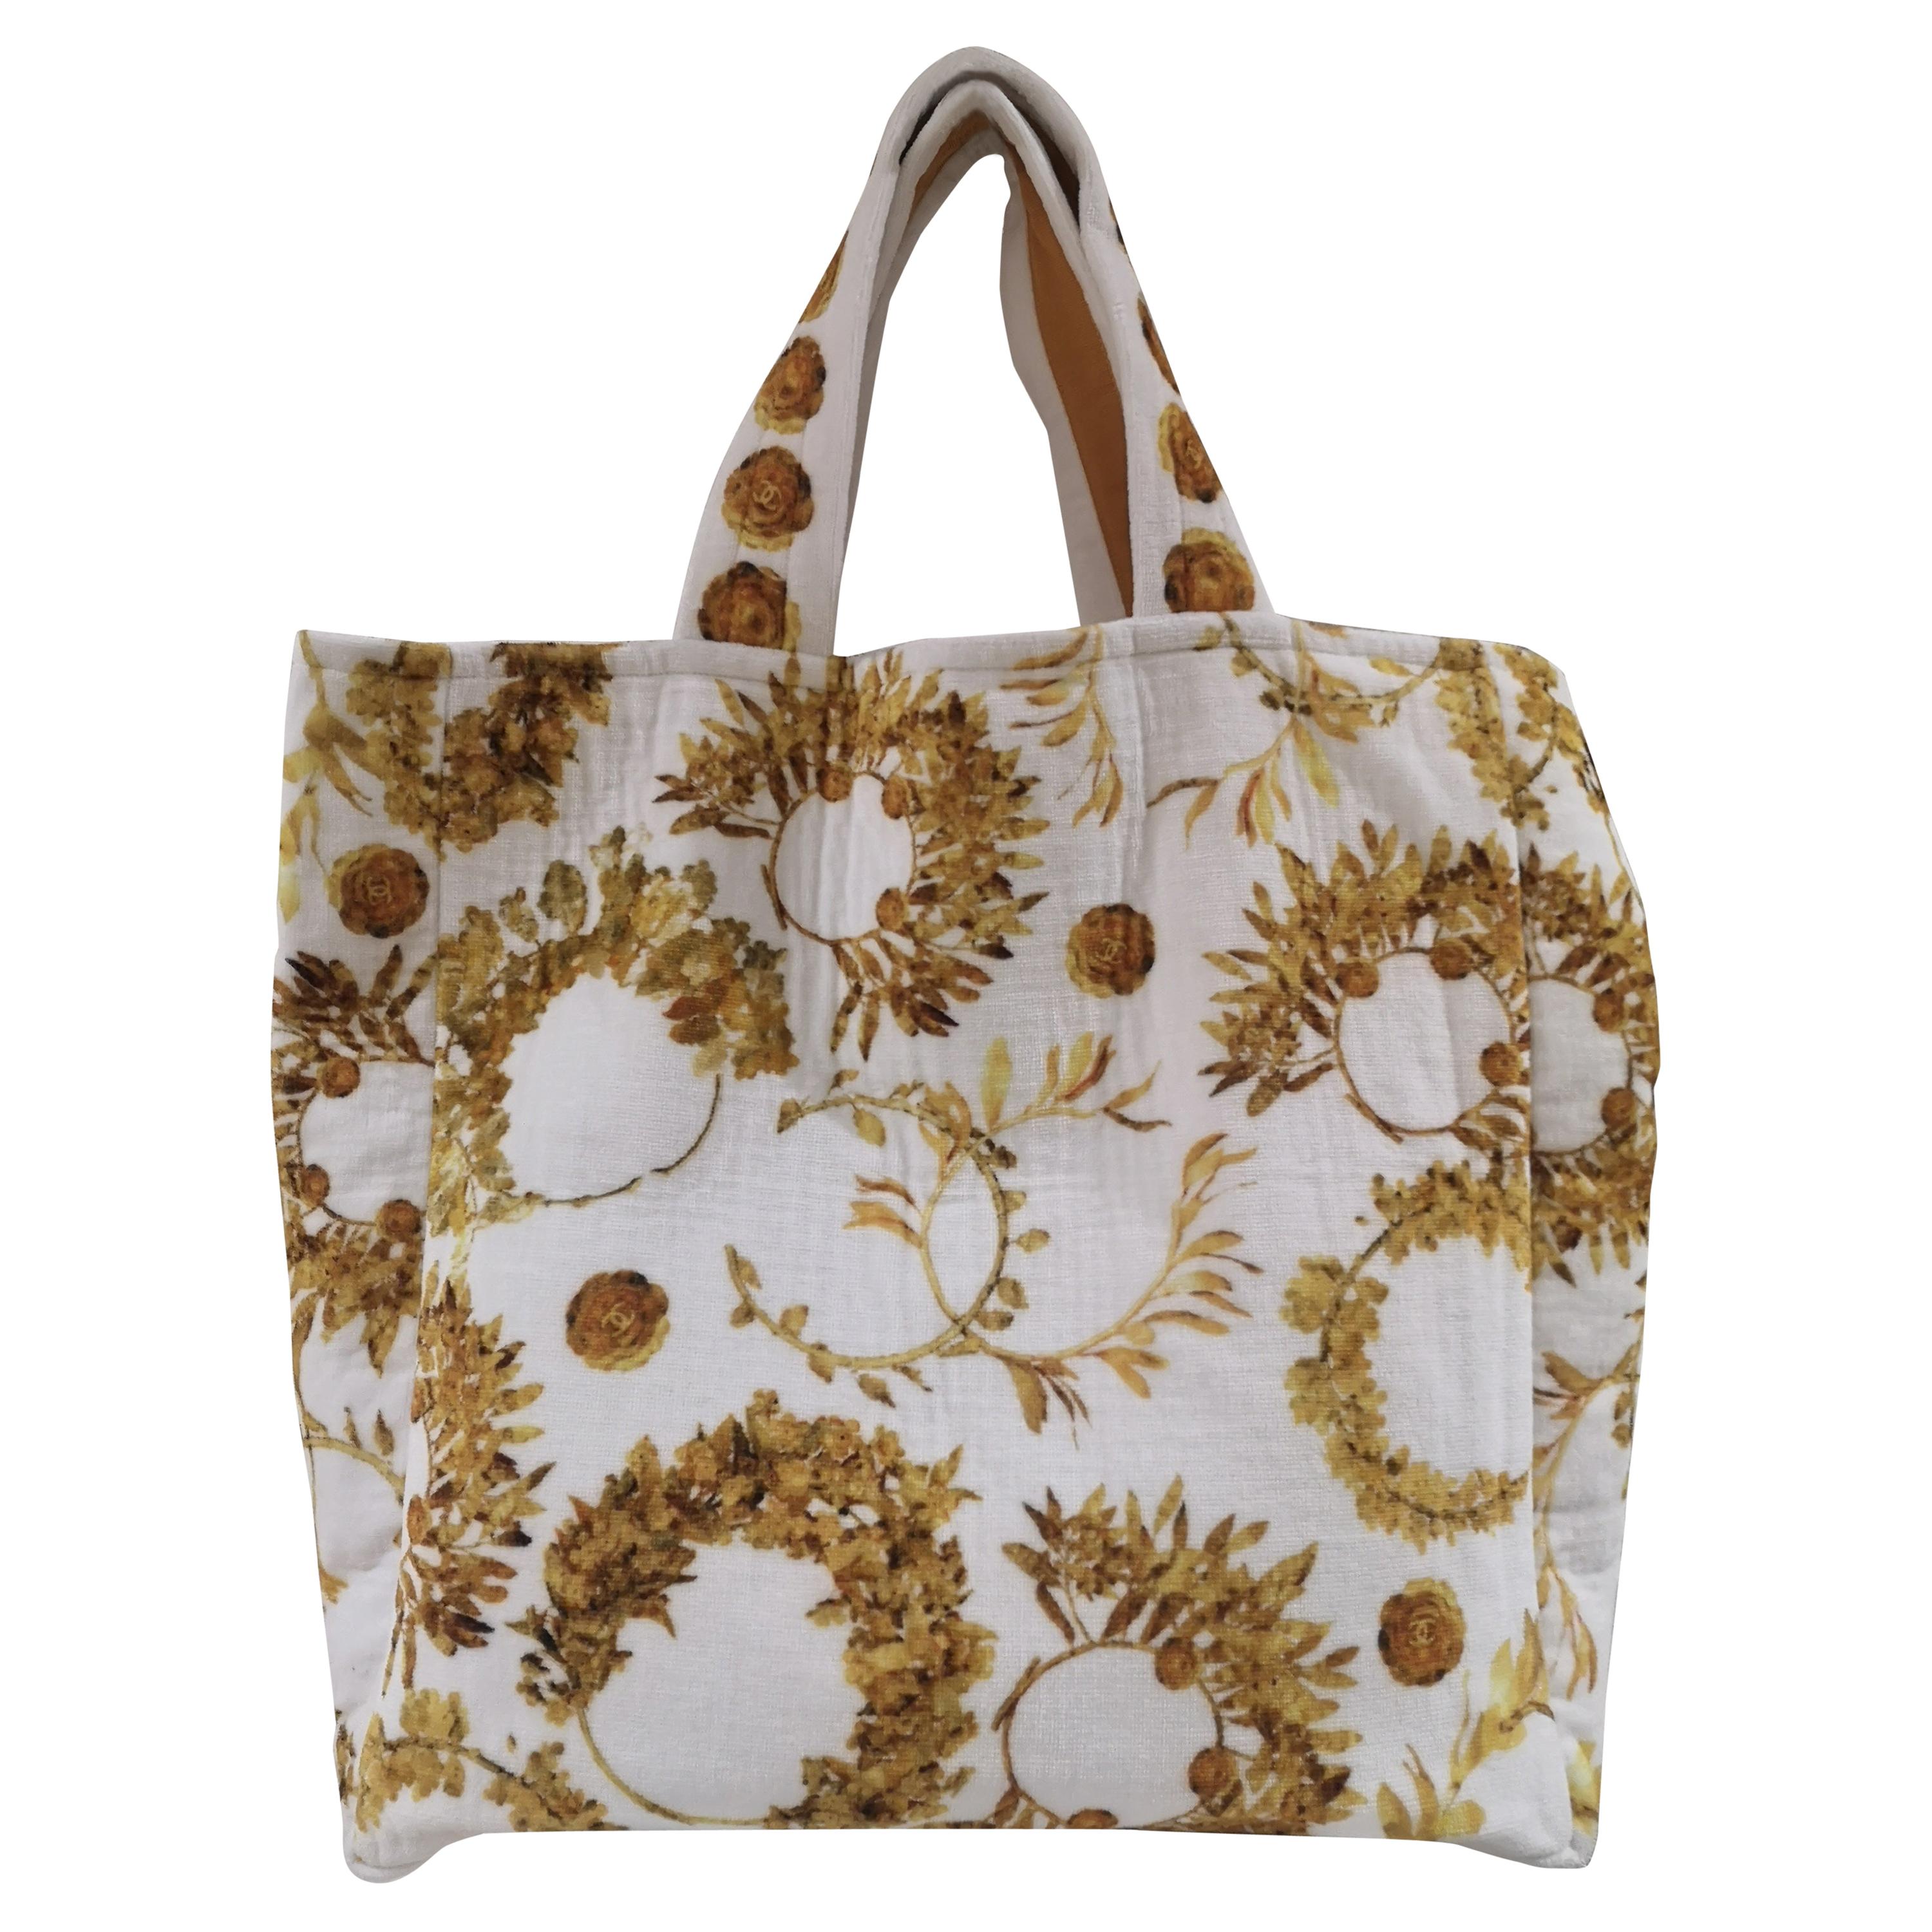 White And Gold Chanel Handbag - 144 For Sale on 1stDibs